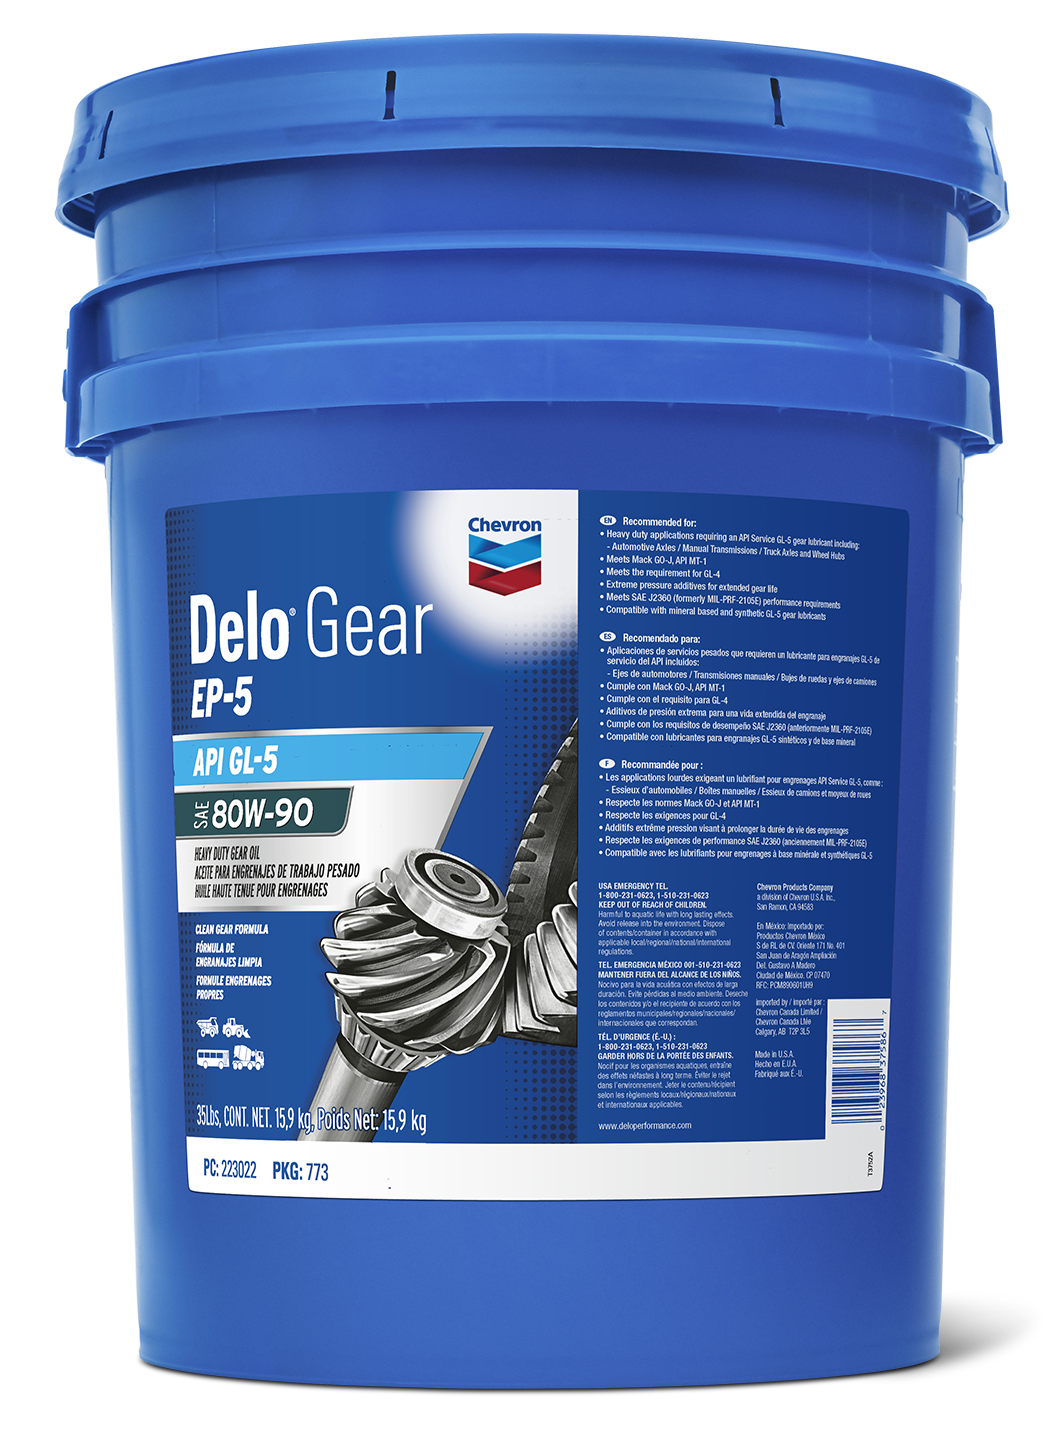 Chevron Delo® Gear EP-5 Gear Oil SAE 80W-90 | Santmyer Online Store